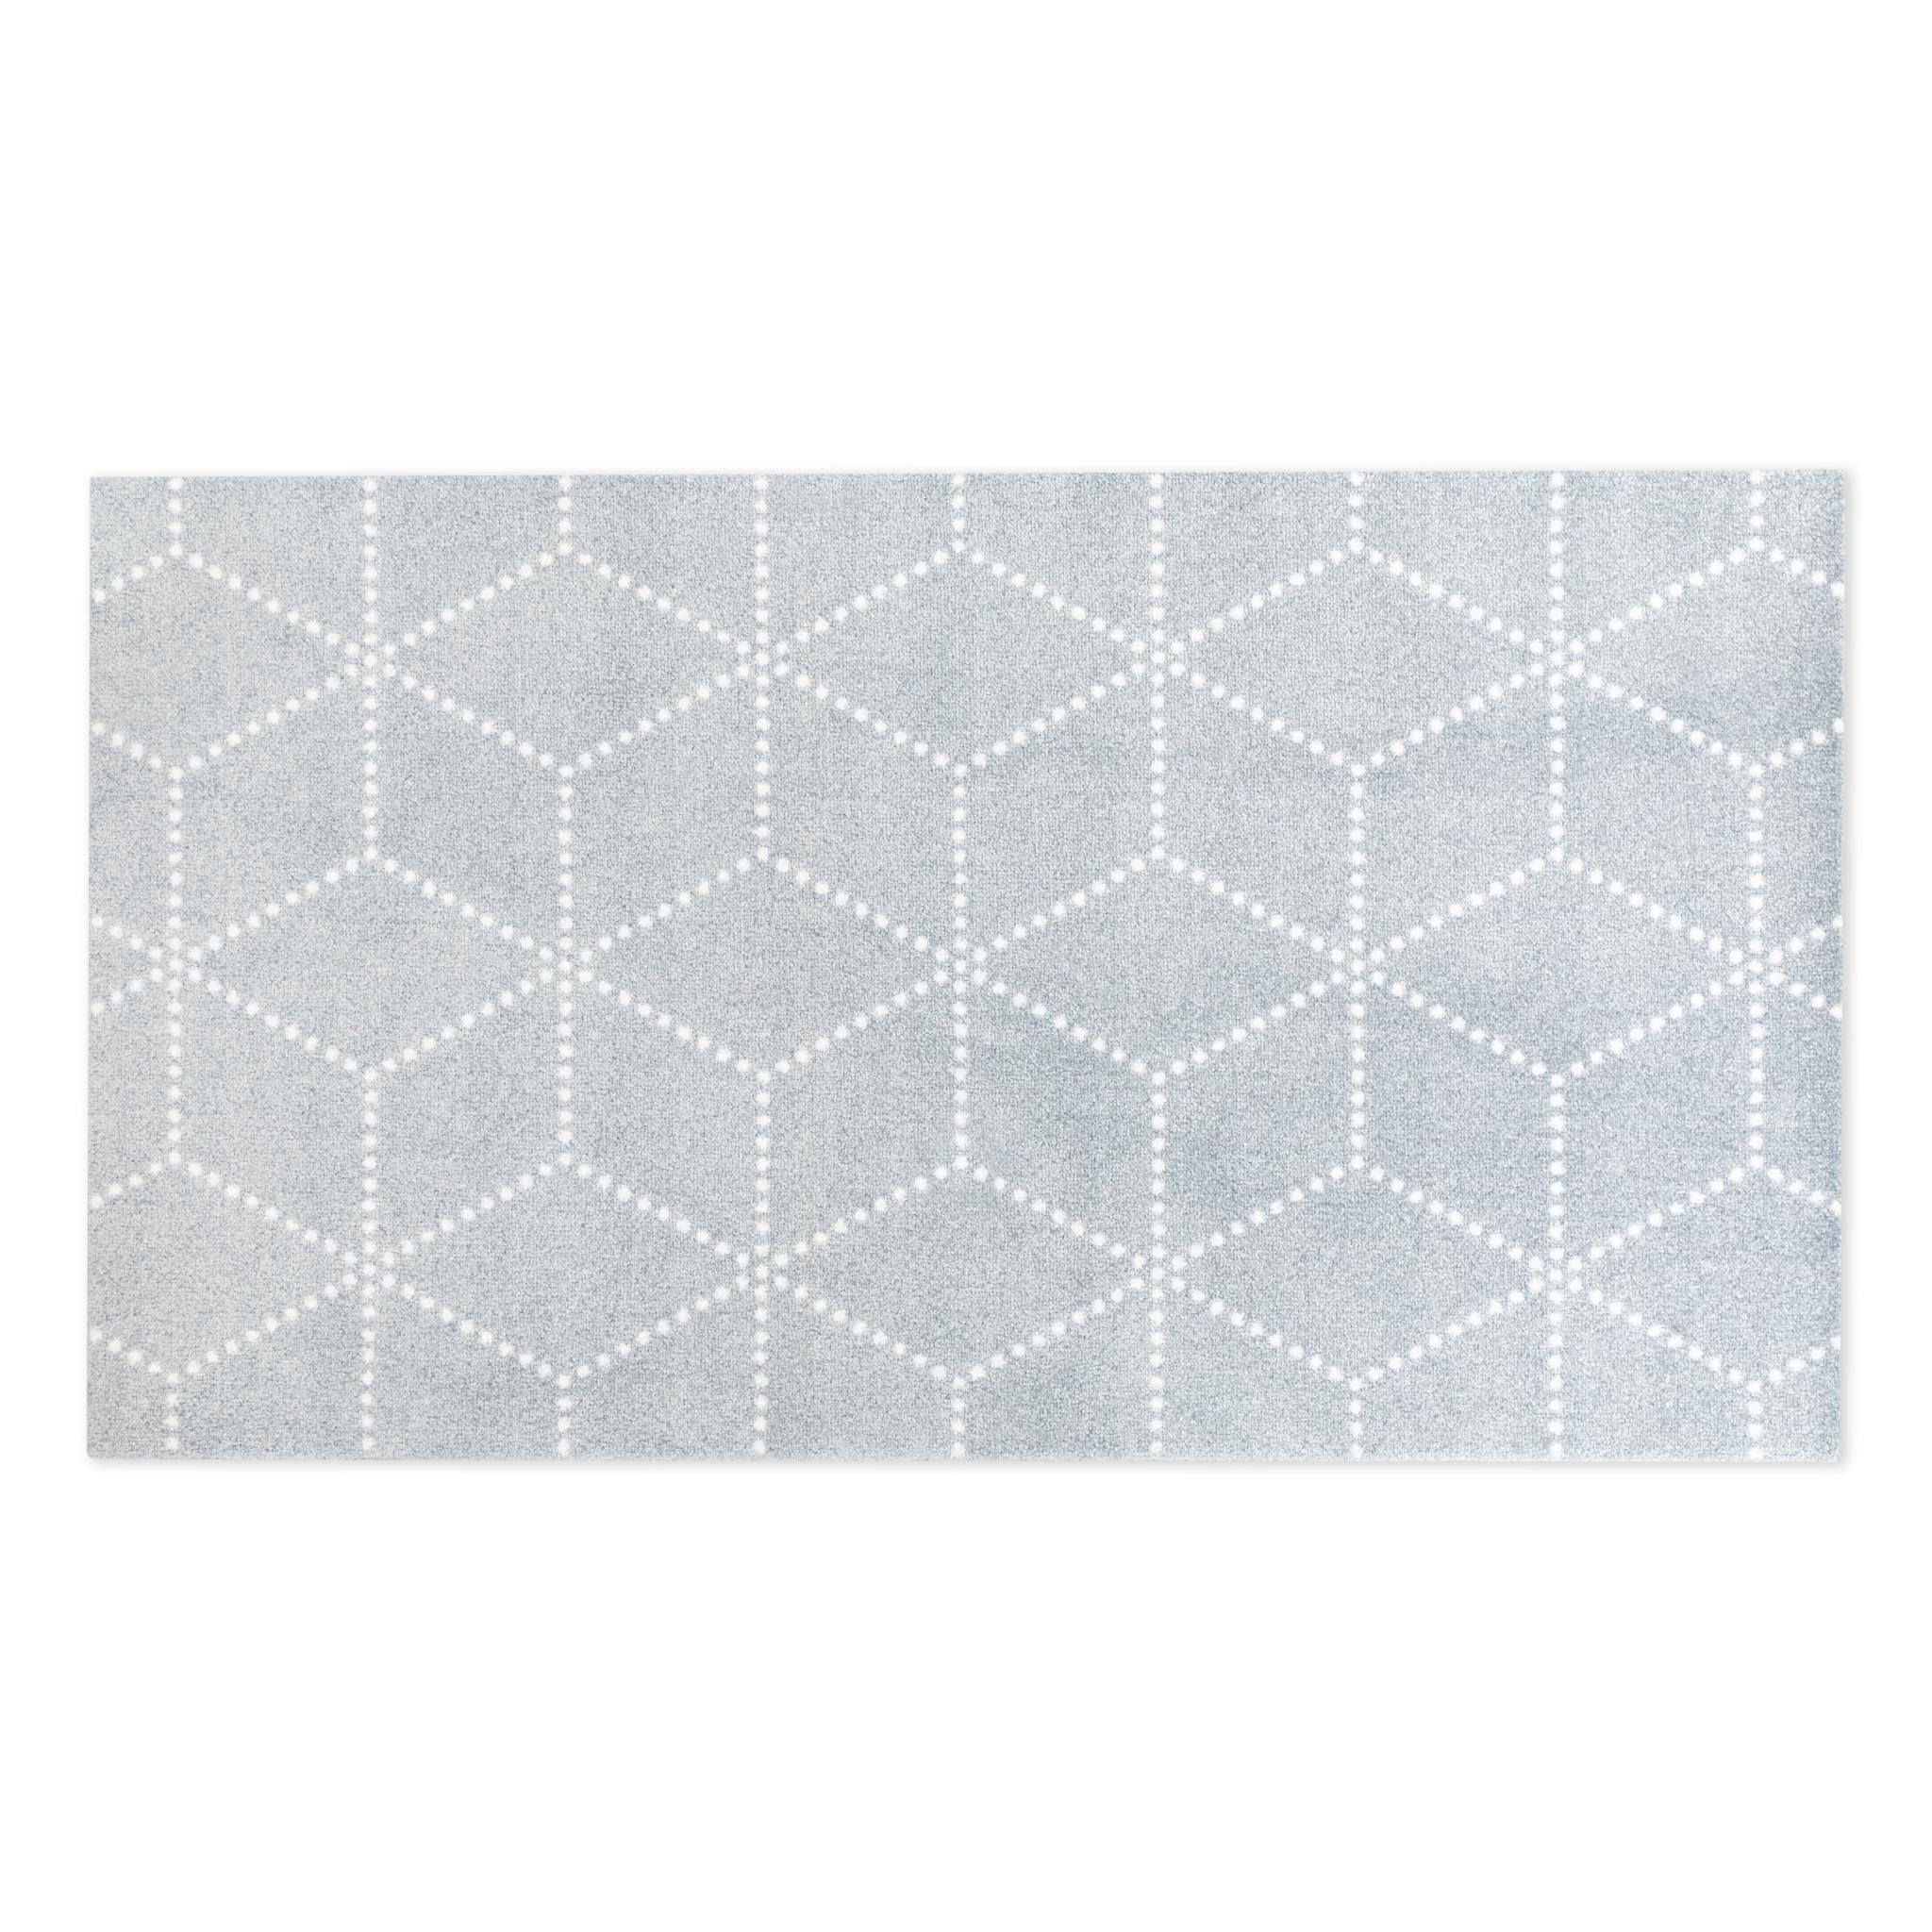 Heymat's Doormat Hagl Silber, 85x150 cm